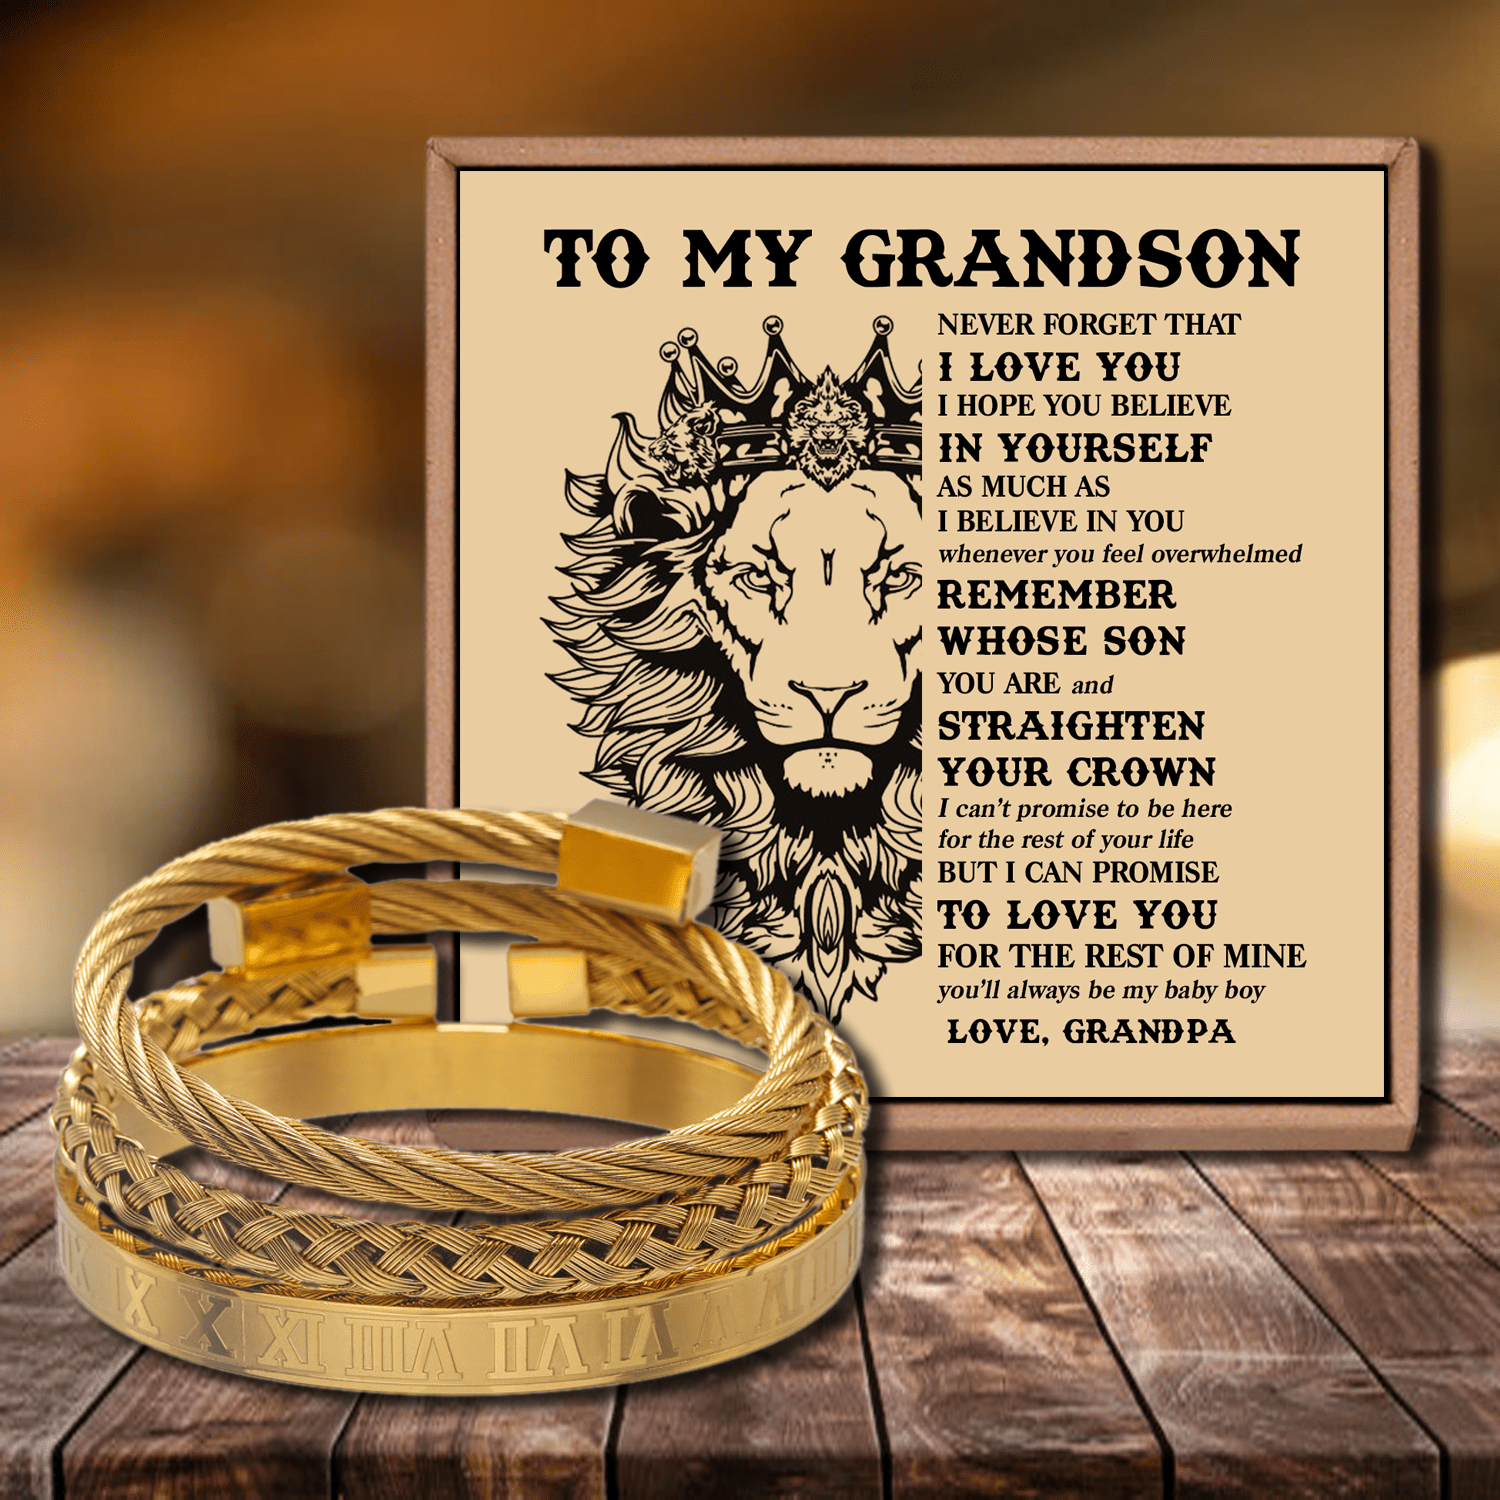 Bracelets Grandpa To Grandson - Straighten Your Crown Roman Numeral Bracelet Set Gold GiveMe-Gifts